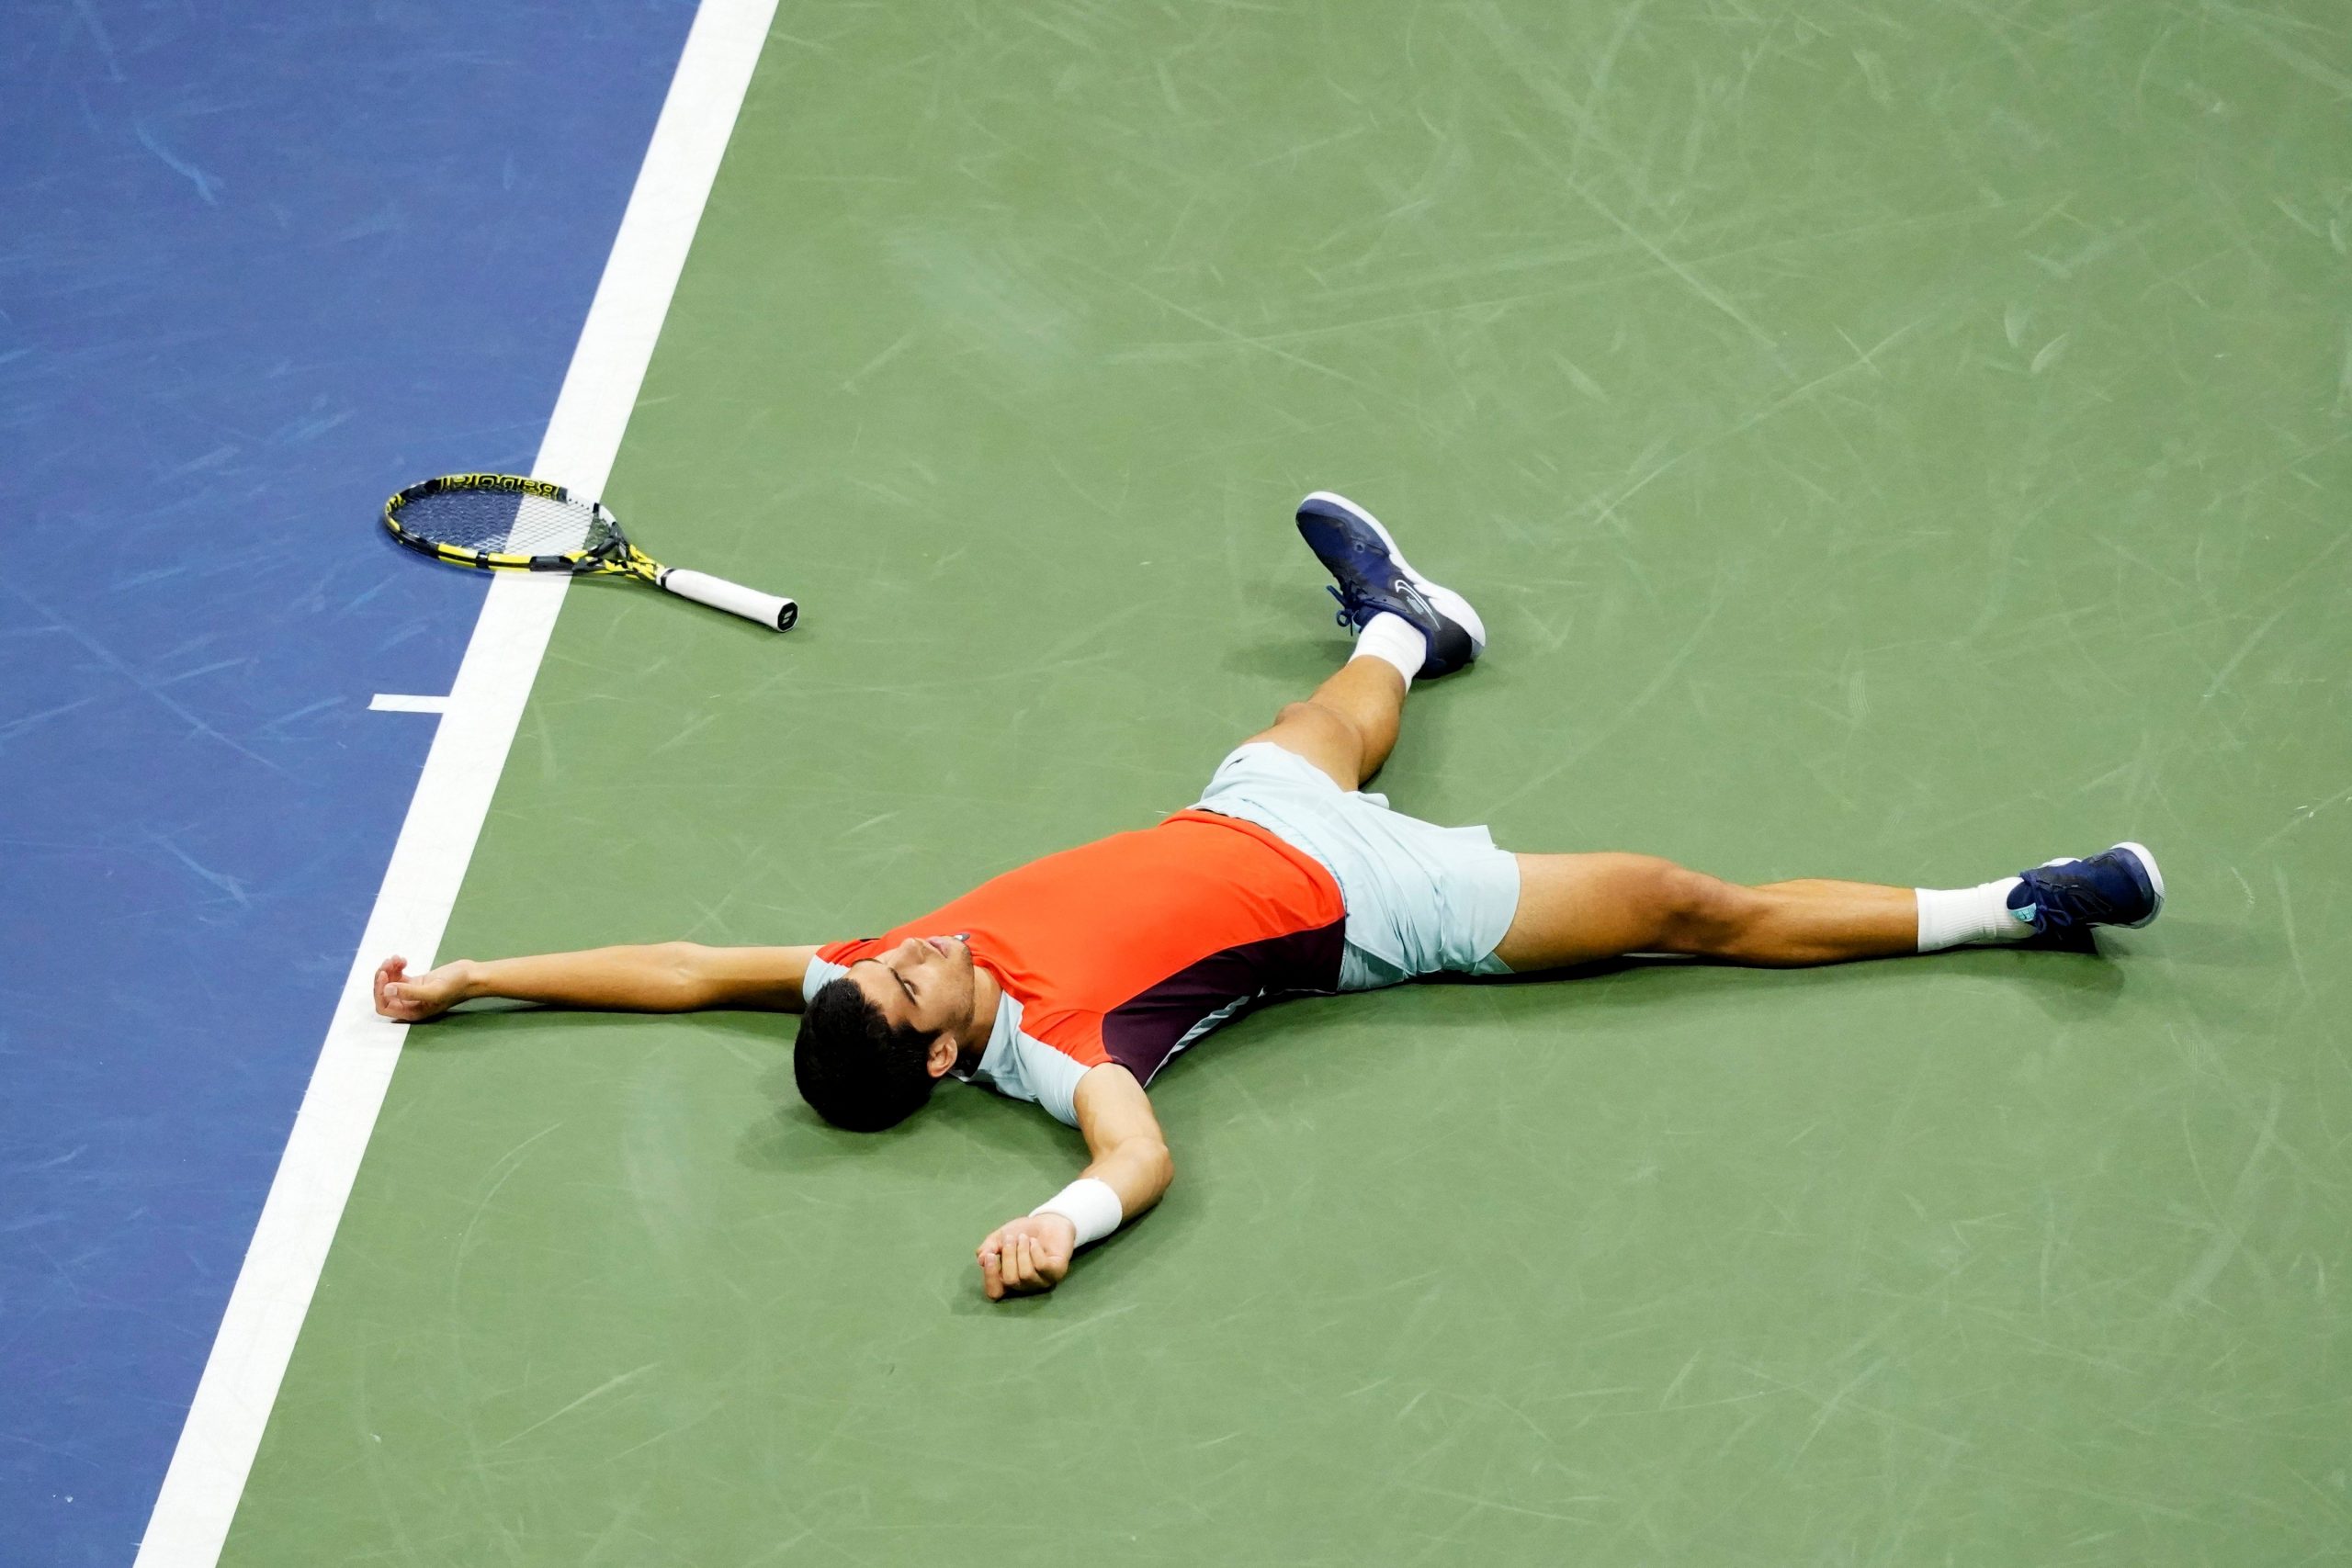 Watch: Carlos Alcarazs winning moment in US Open semifinal